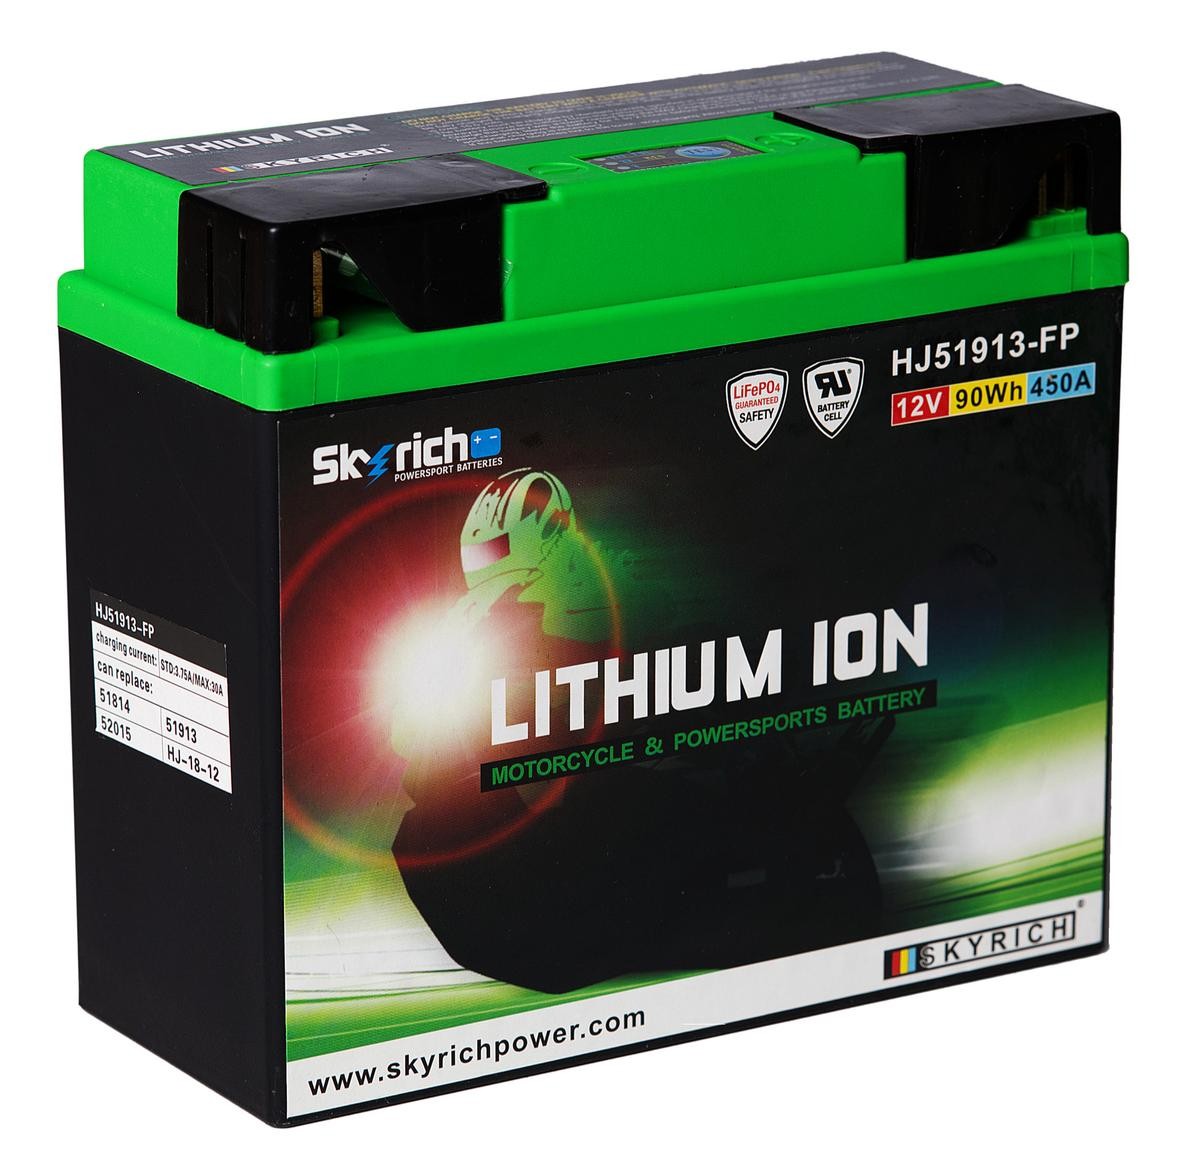 BMW R 850 Batterie 12V 7,5Ah 450A N Li-Ionen-Batterie SKYRICH LITHIUM ION HJ51913-FP